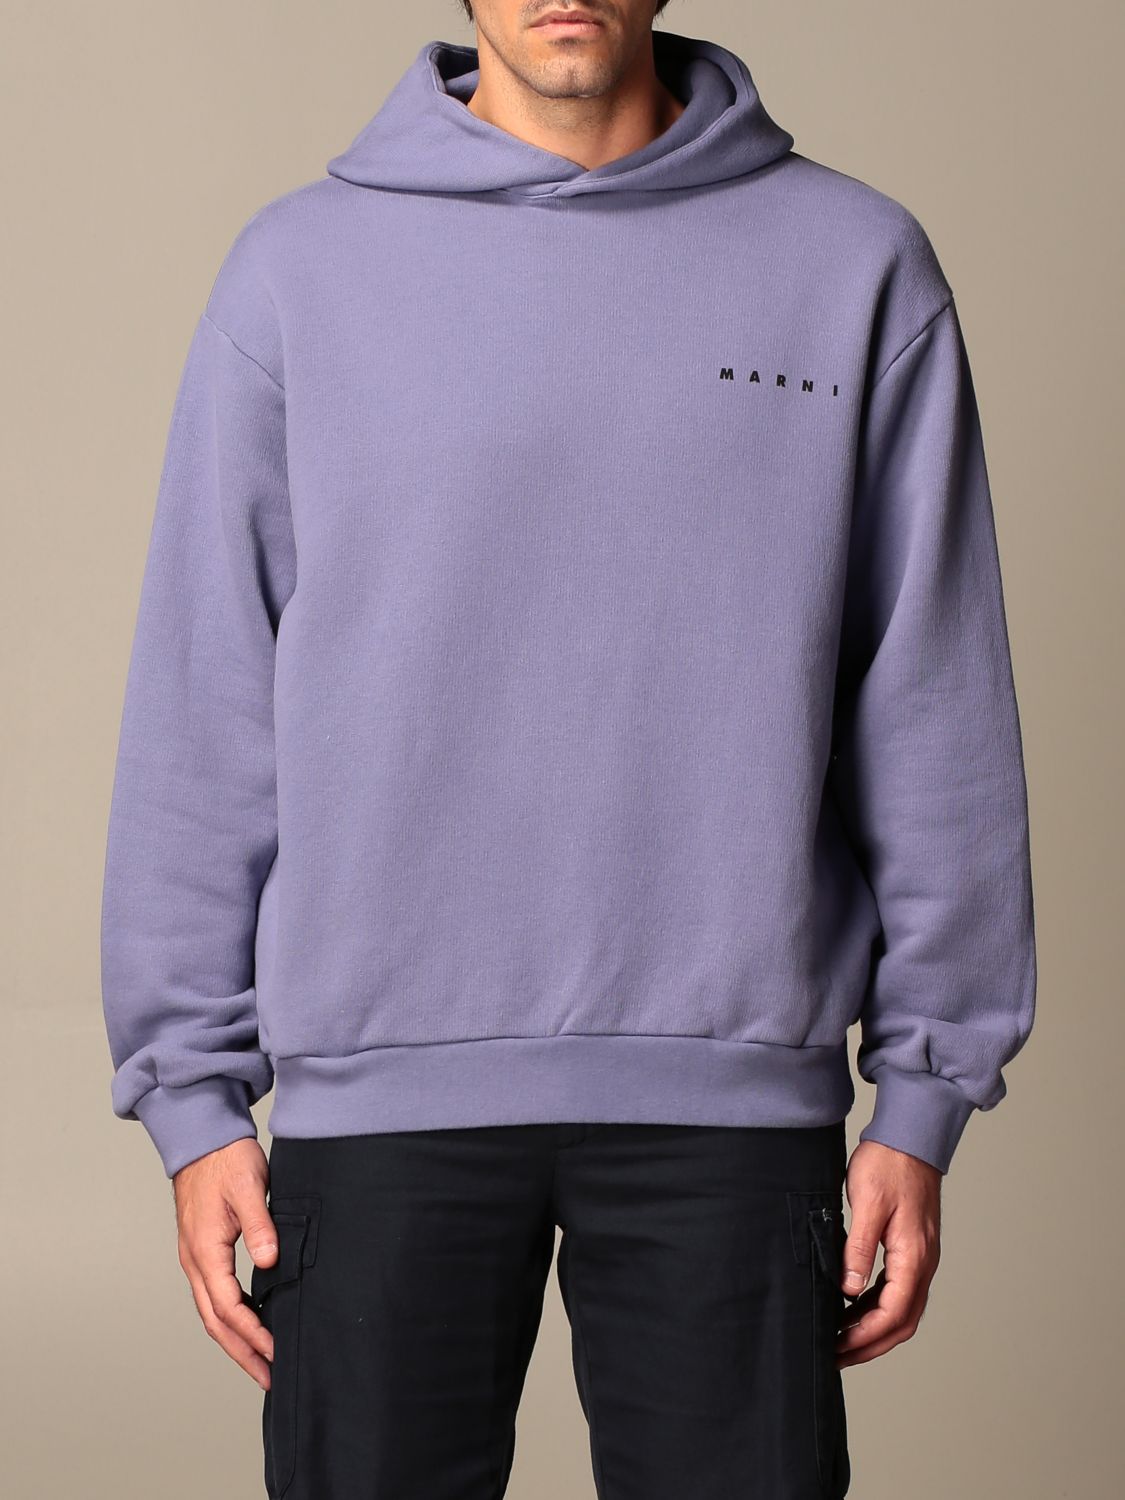 Marni cotton sweatshirt with big logo and back print